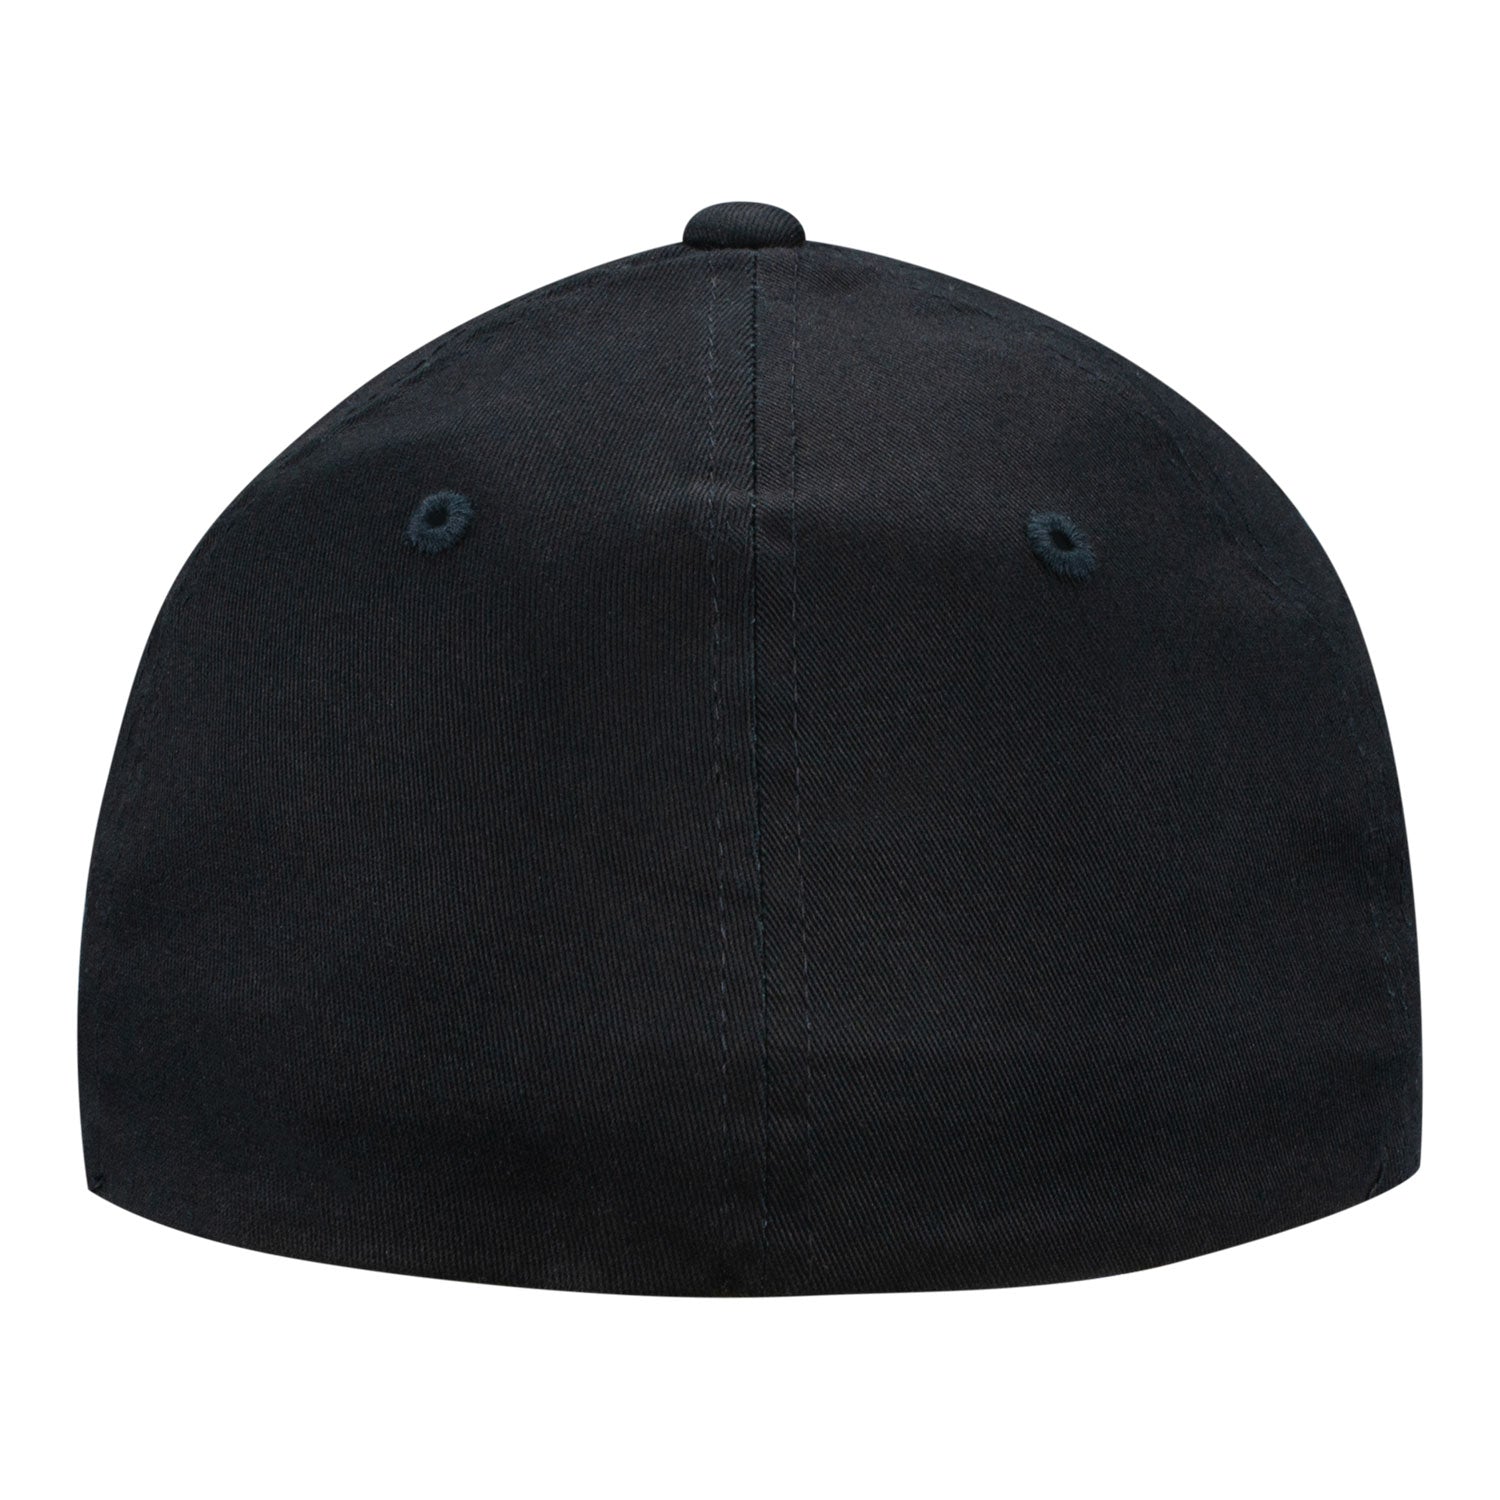 Optic Texas Black of League Duty Hat – Call Shop Flex-Fit